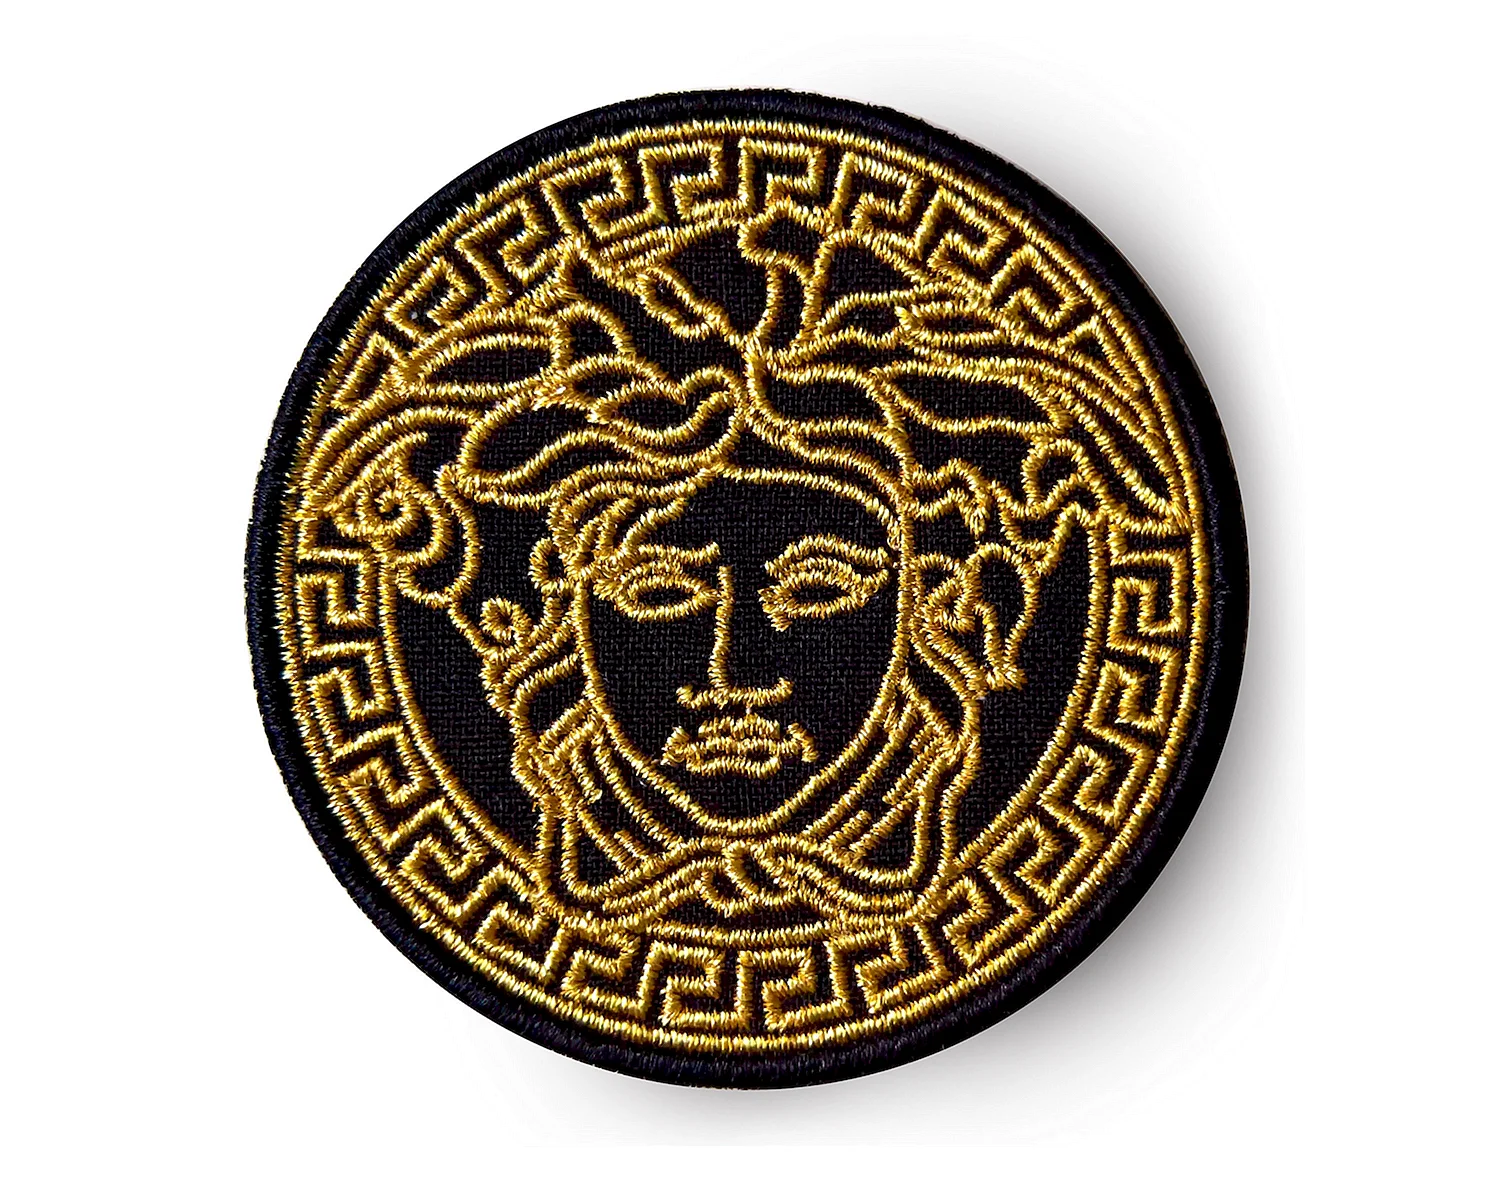 Versace Black Gold logo